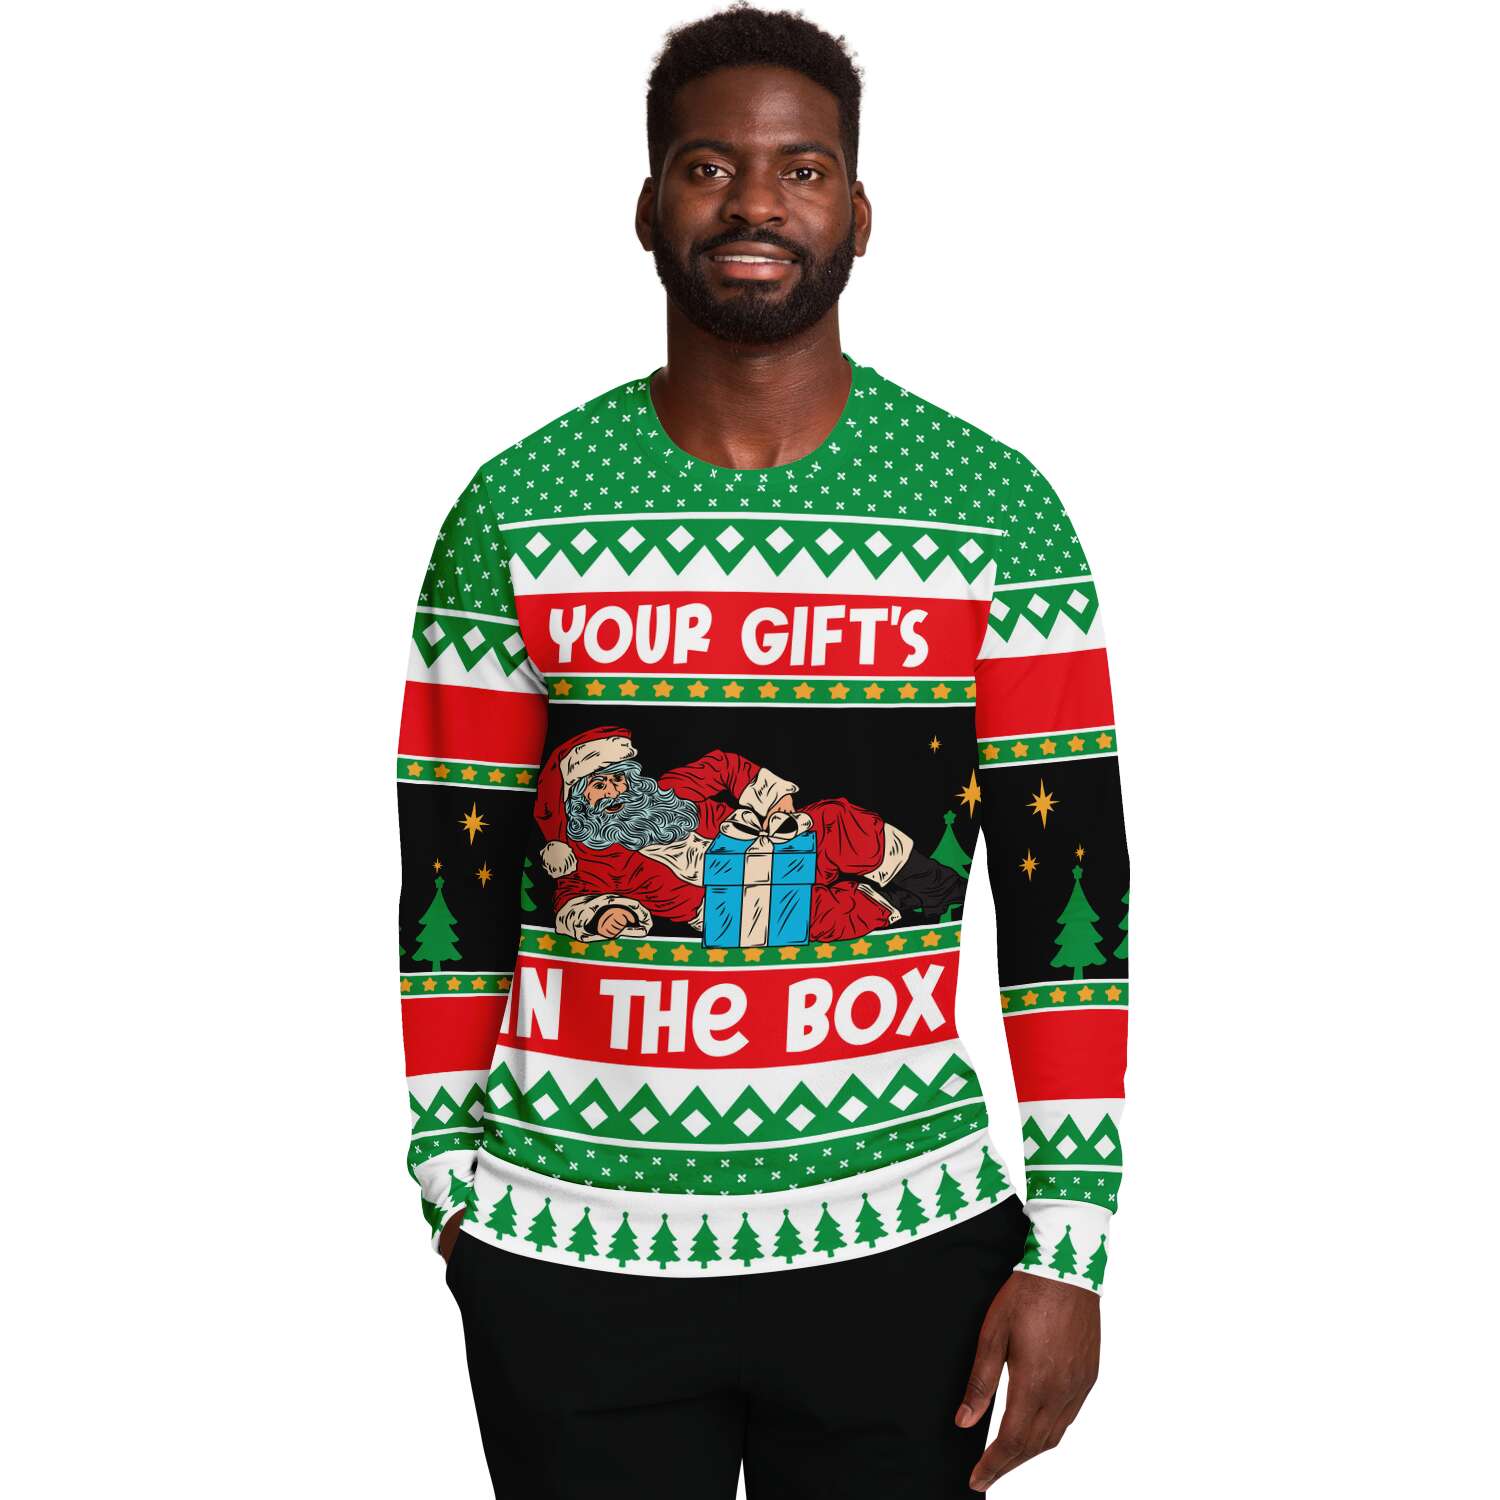 Gift In The Box Sweatshirt | Unisex Ugly Christmas Sweater, Xmas Sweater, Holiday Sweater, Festive Sweater, Funny Sweater, Funny Party Shirt